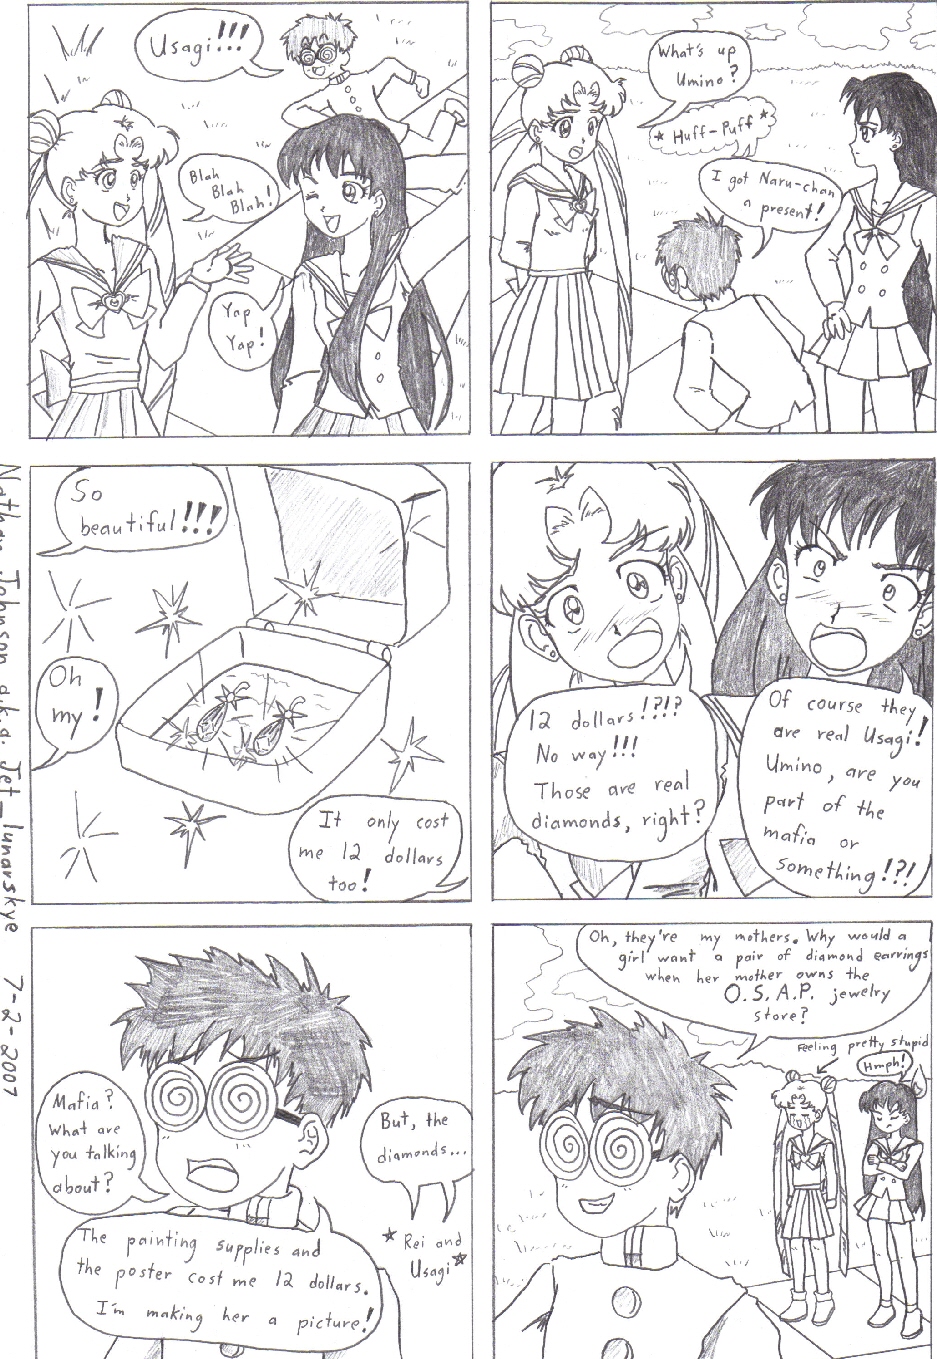 Mini-manga: Umino and the earrings by Jet_lunarskye